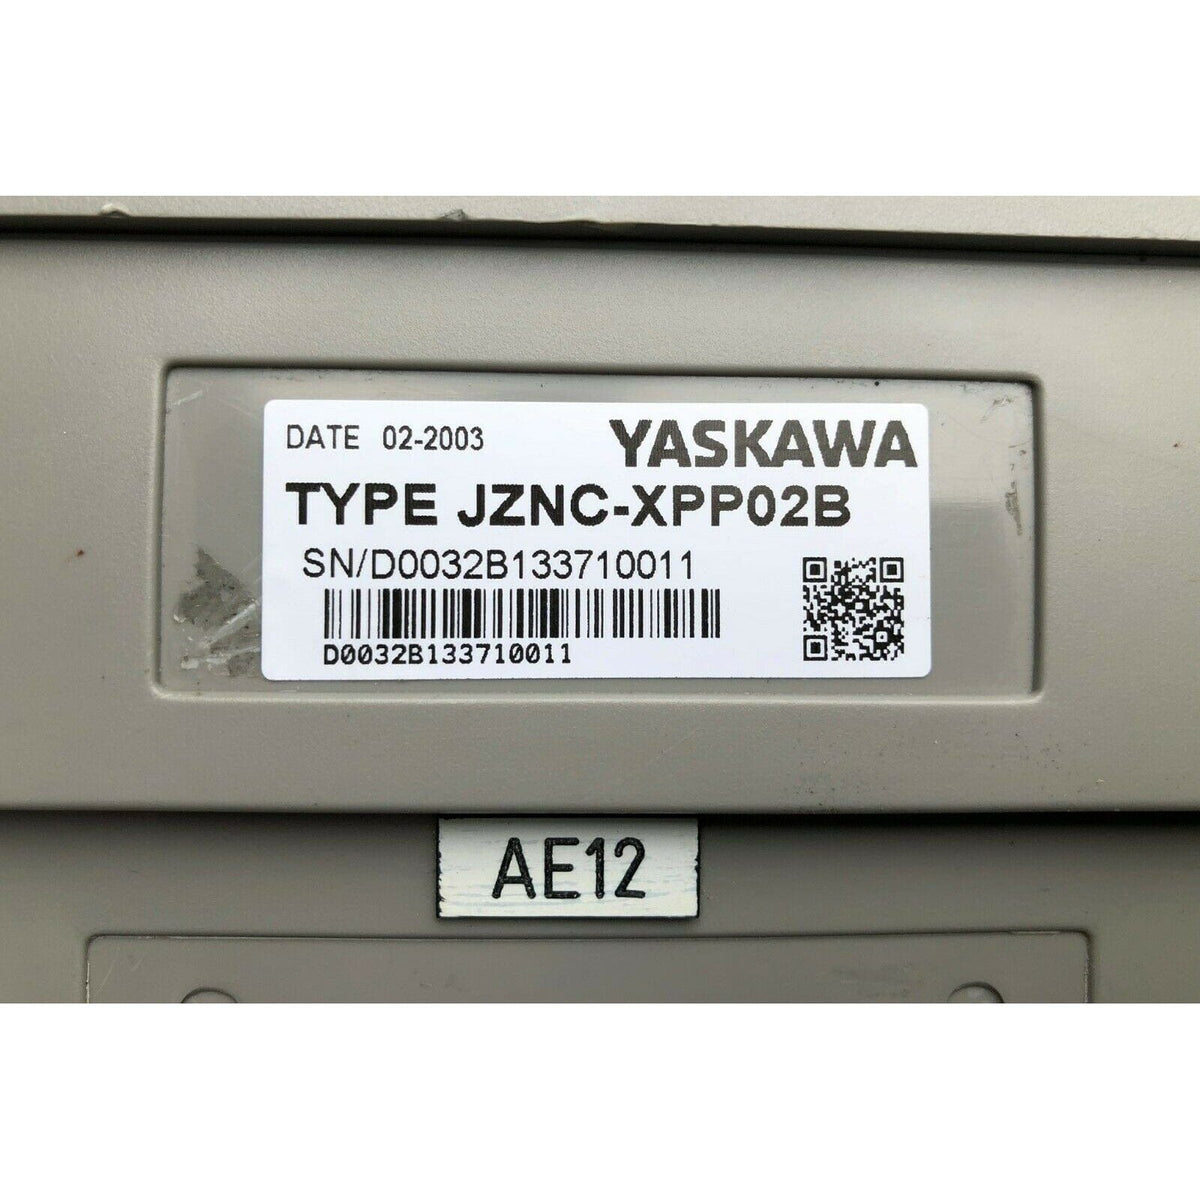 Yaskawa YASNAC XRC JZNC-XPP02B Teach Pendant without cable